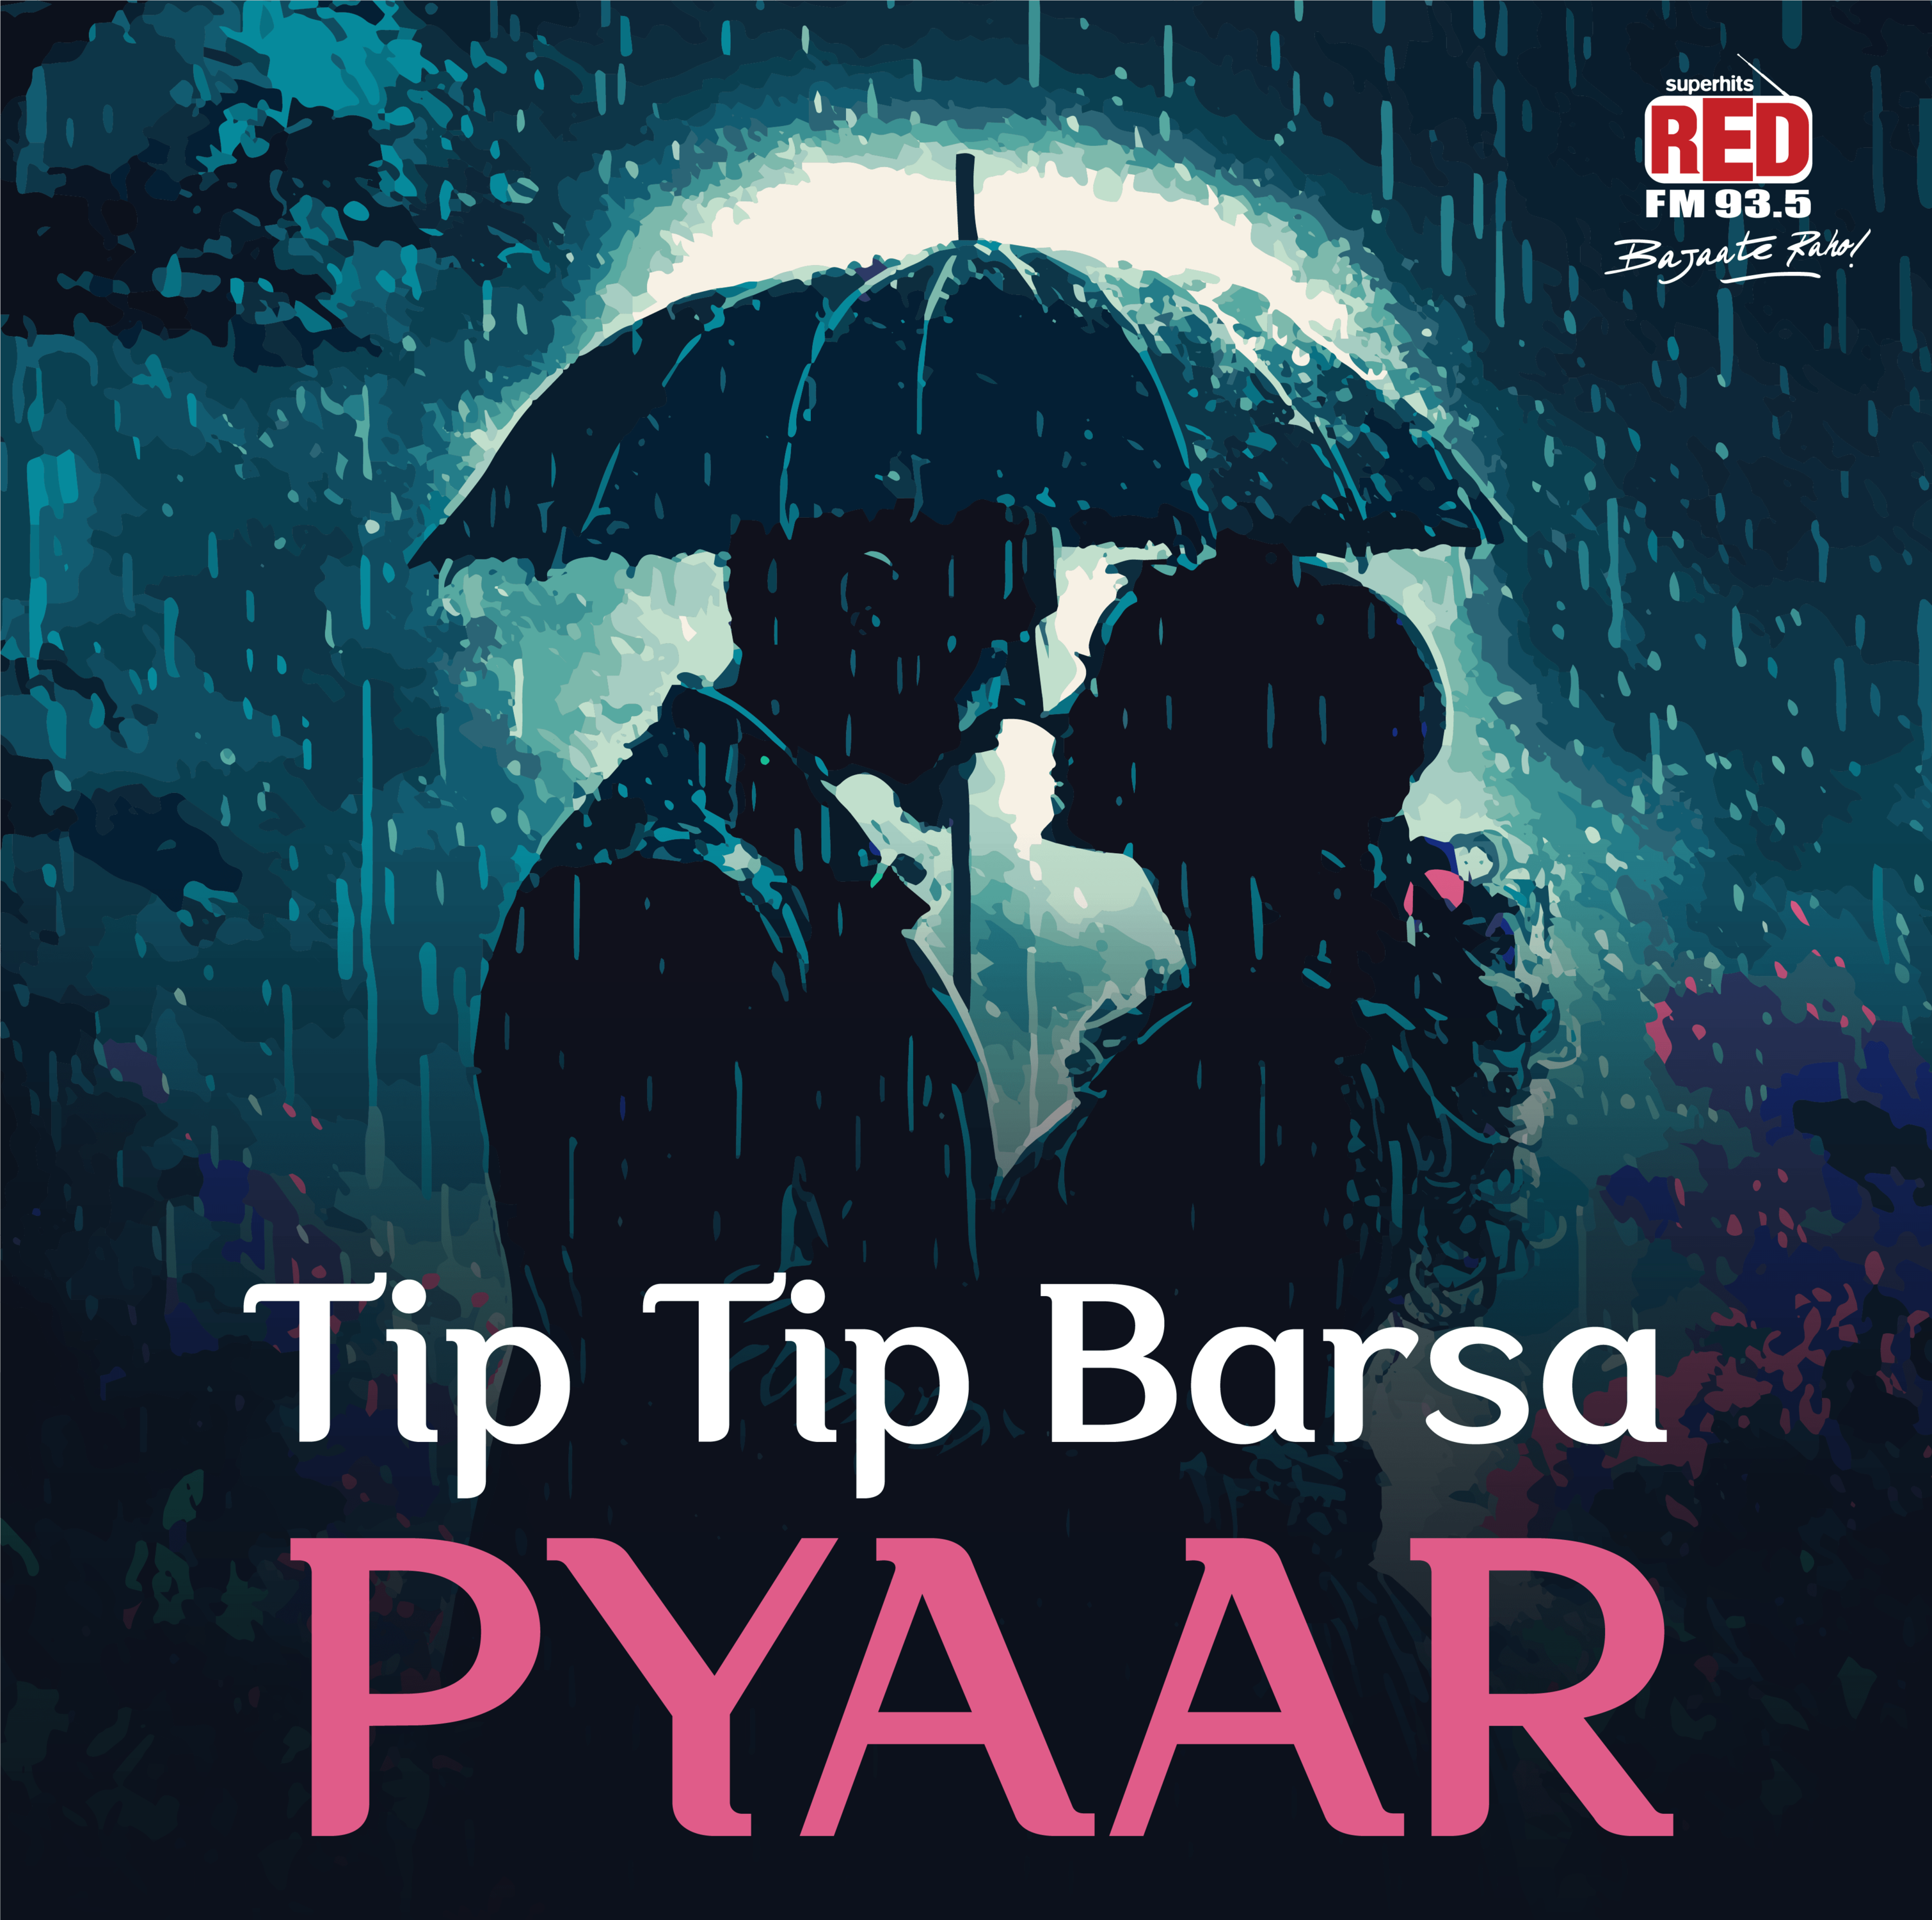 Tip Tip Barsa Pyaar